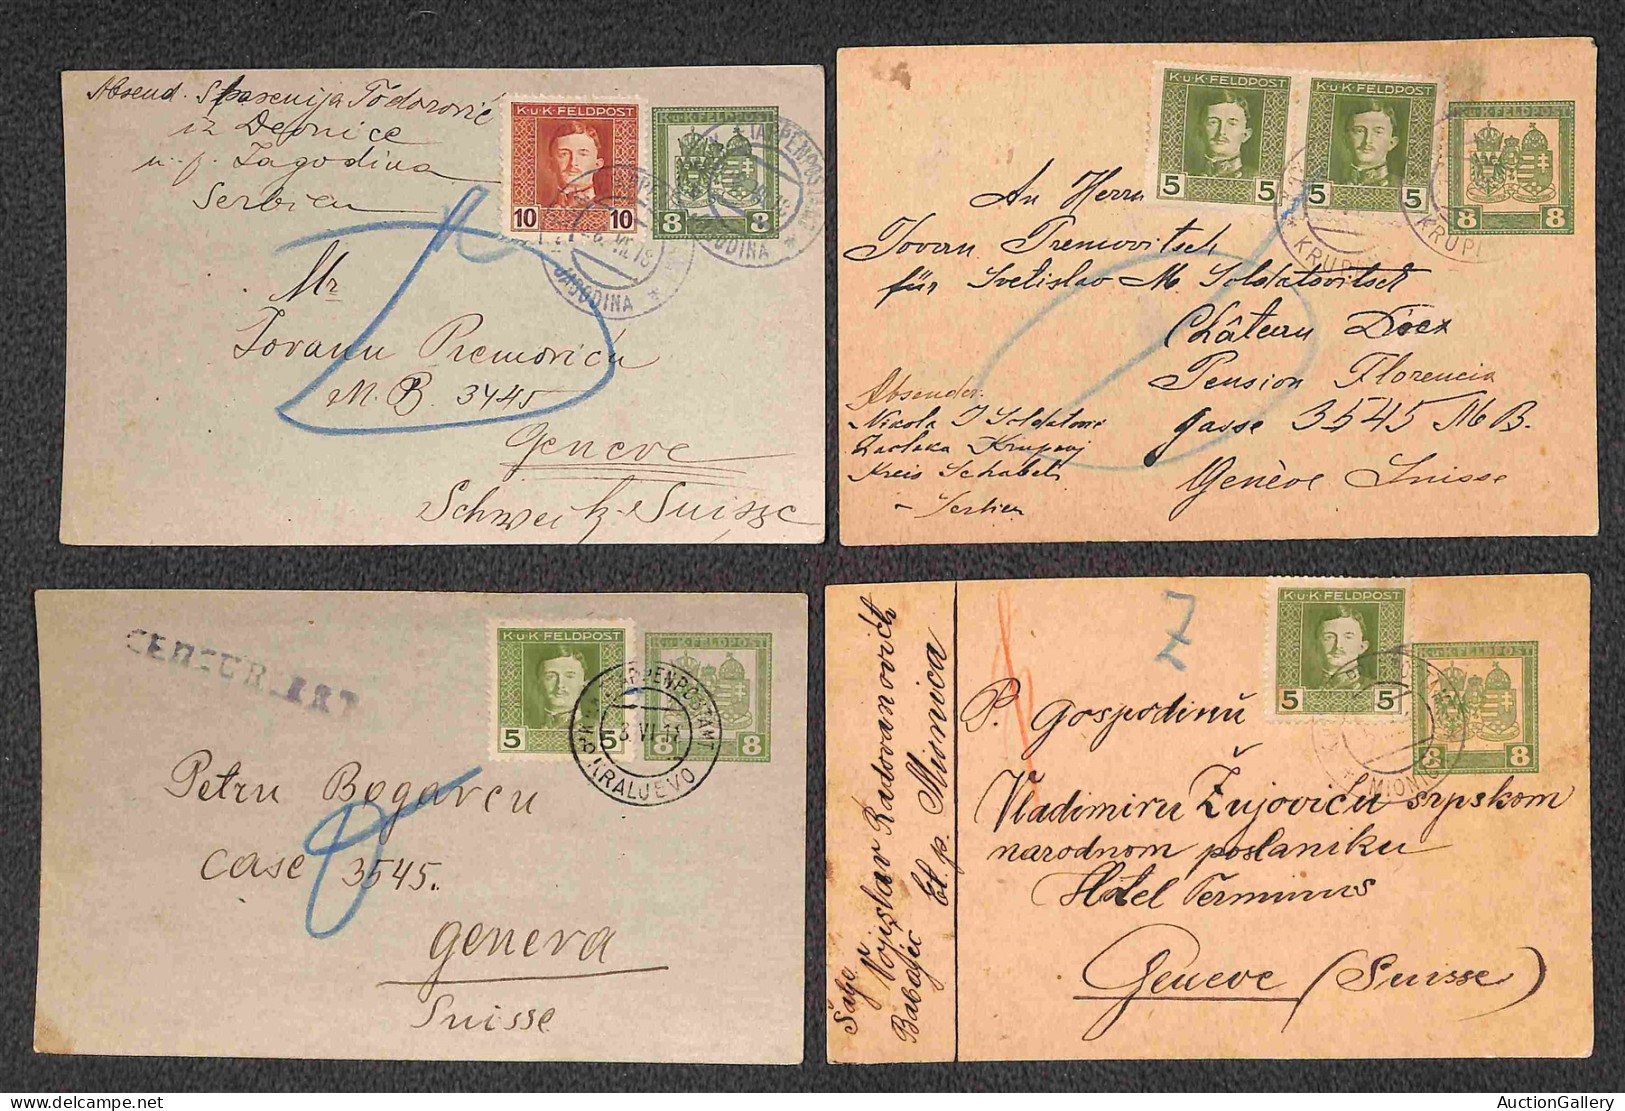 Europa - Austria - K.U.K. Feldpost + Bosnia/Erzegovina - 16 cartoline postali (2 nuove) + 2 cartoline + 2 raccomandate c